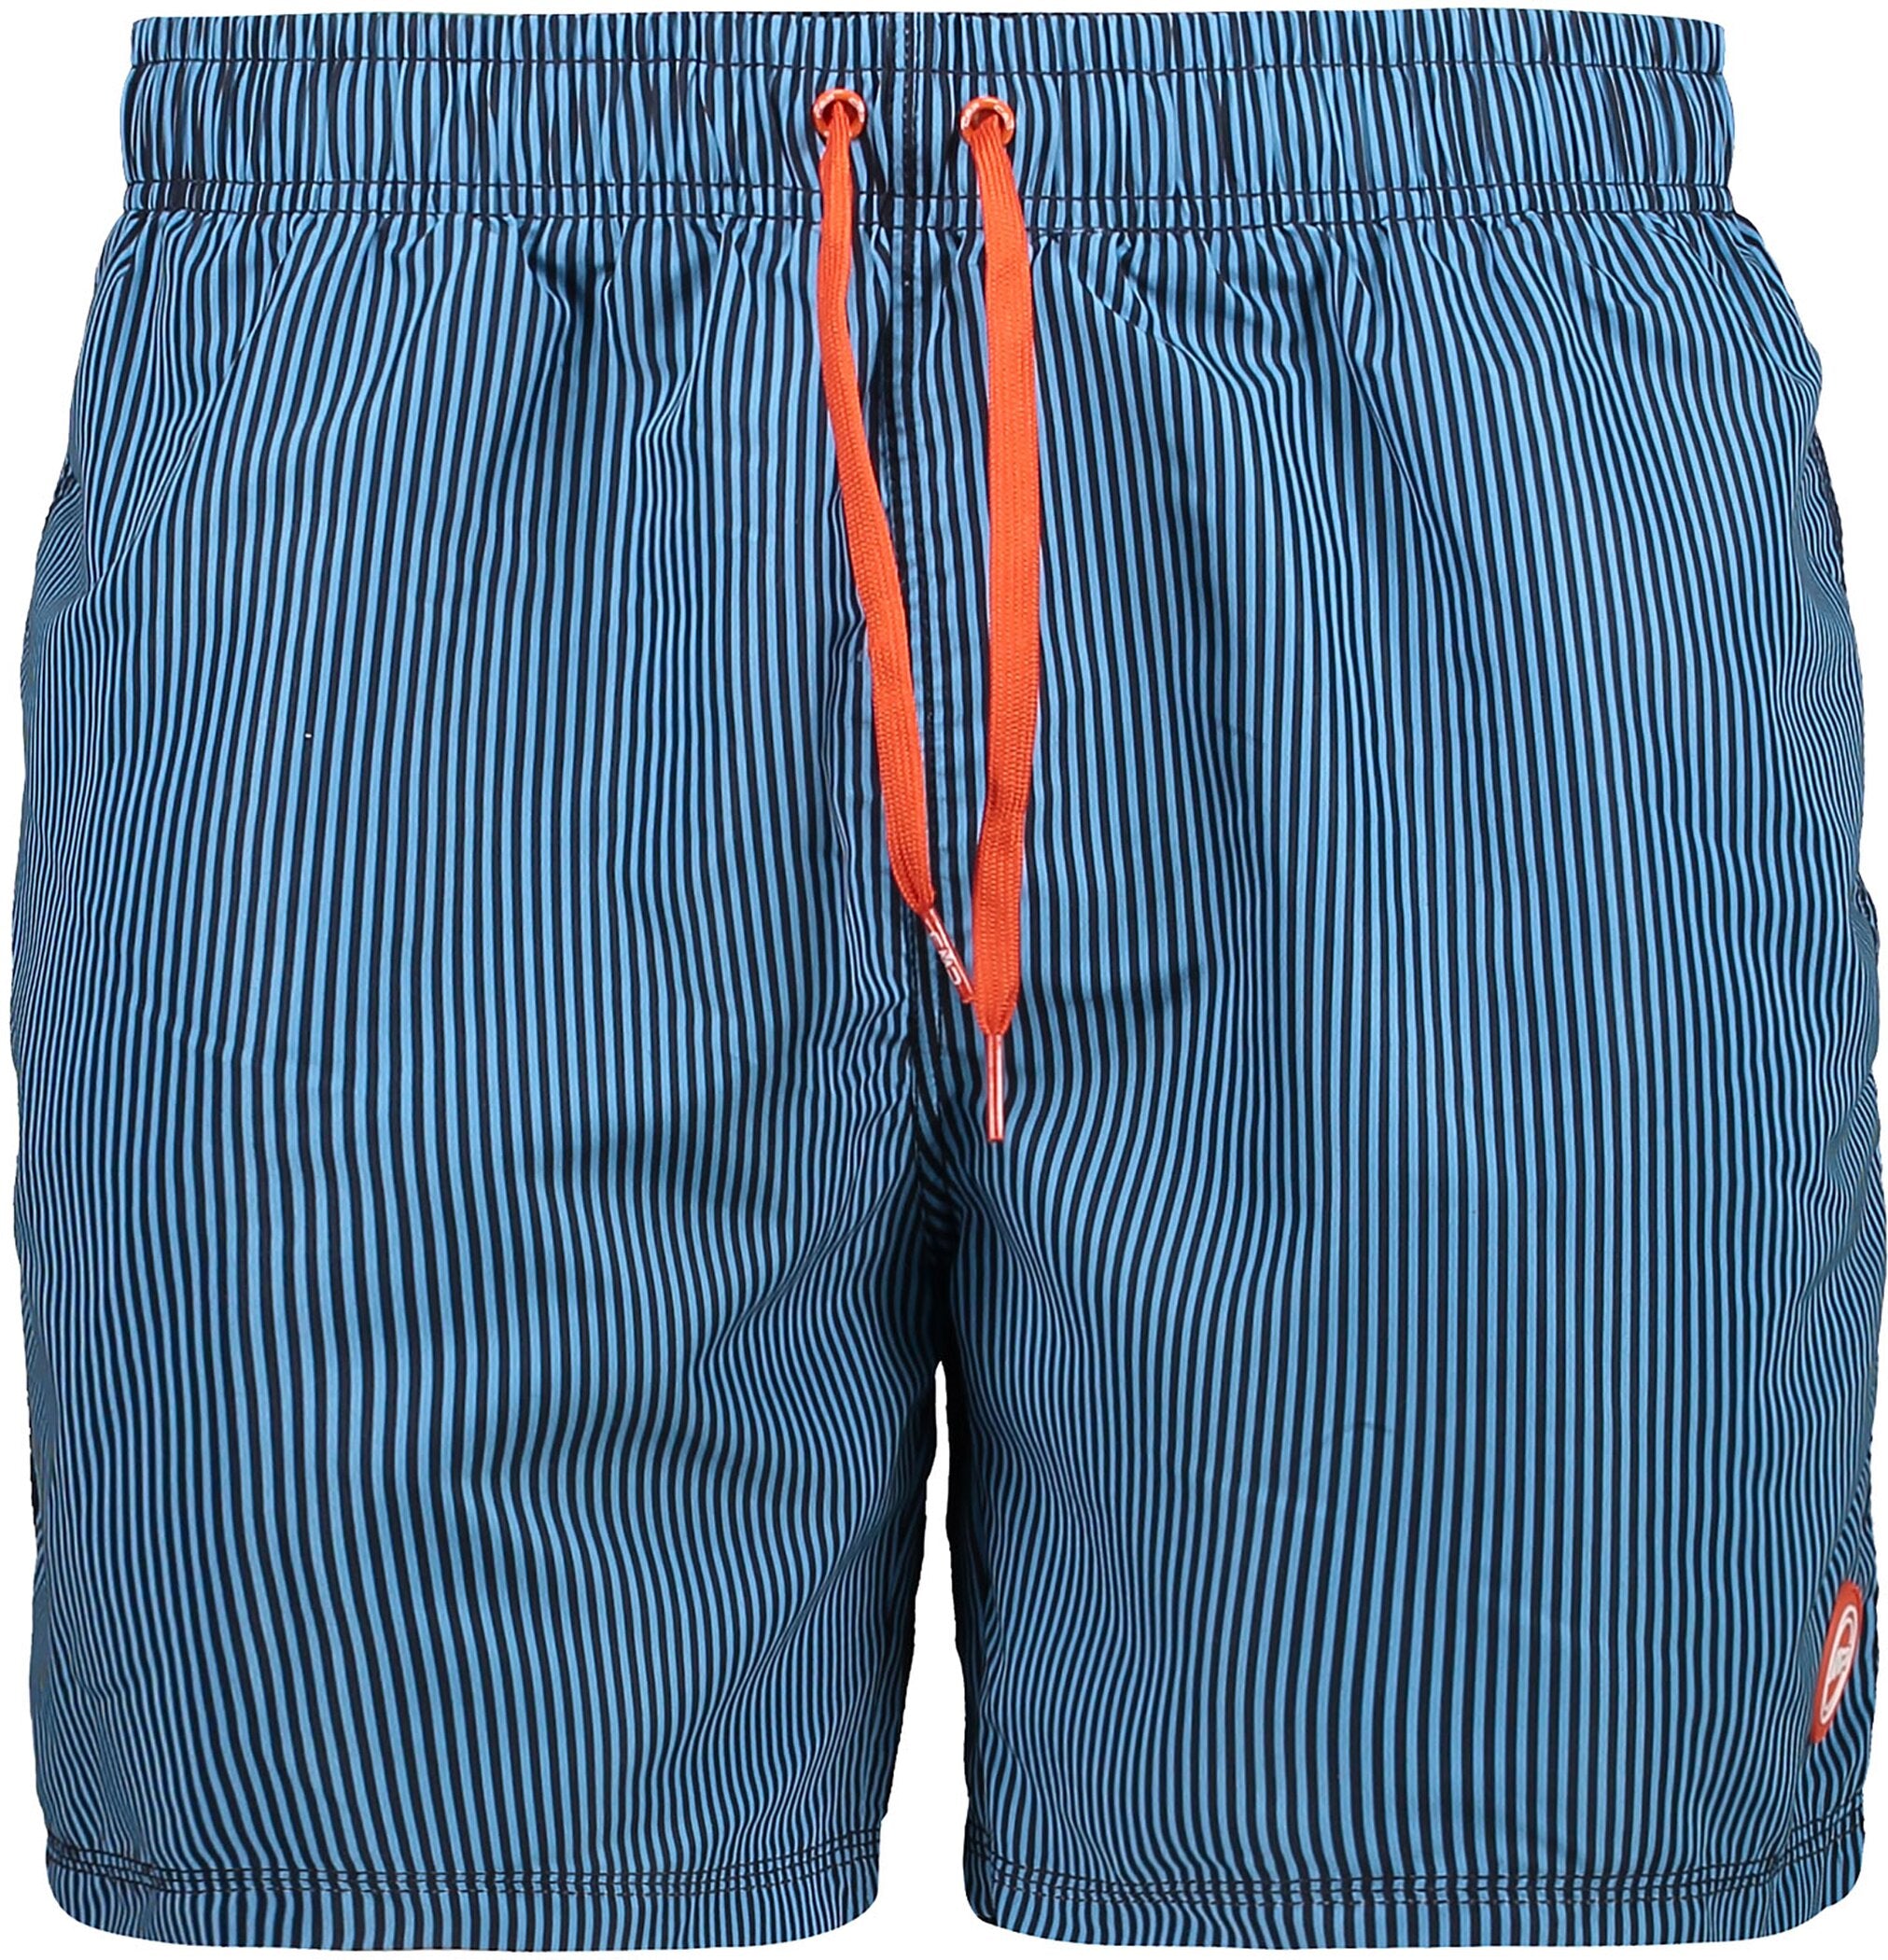 Herren Badeshorts Shorts